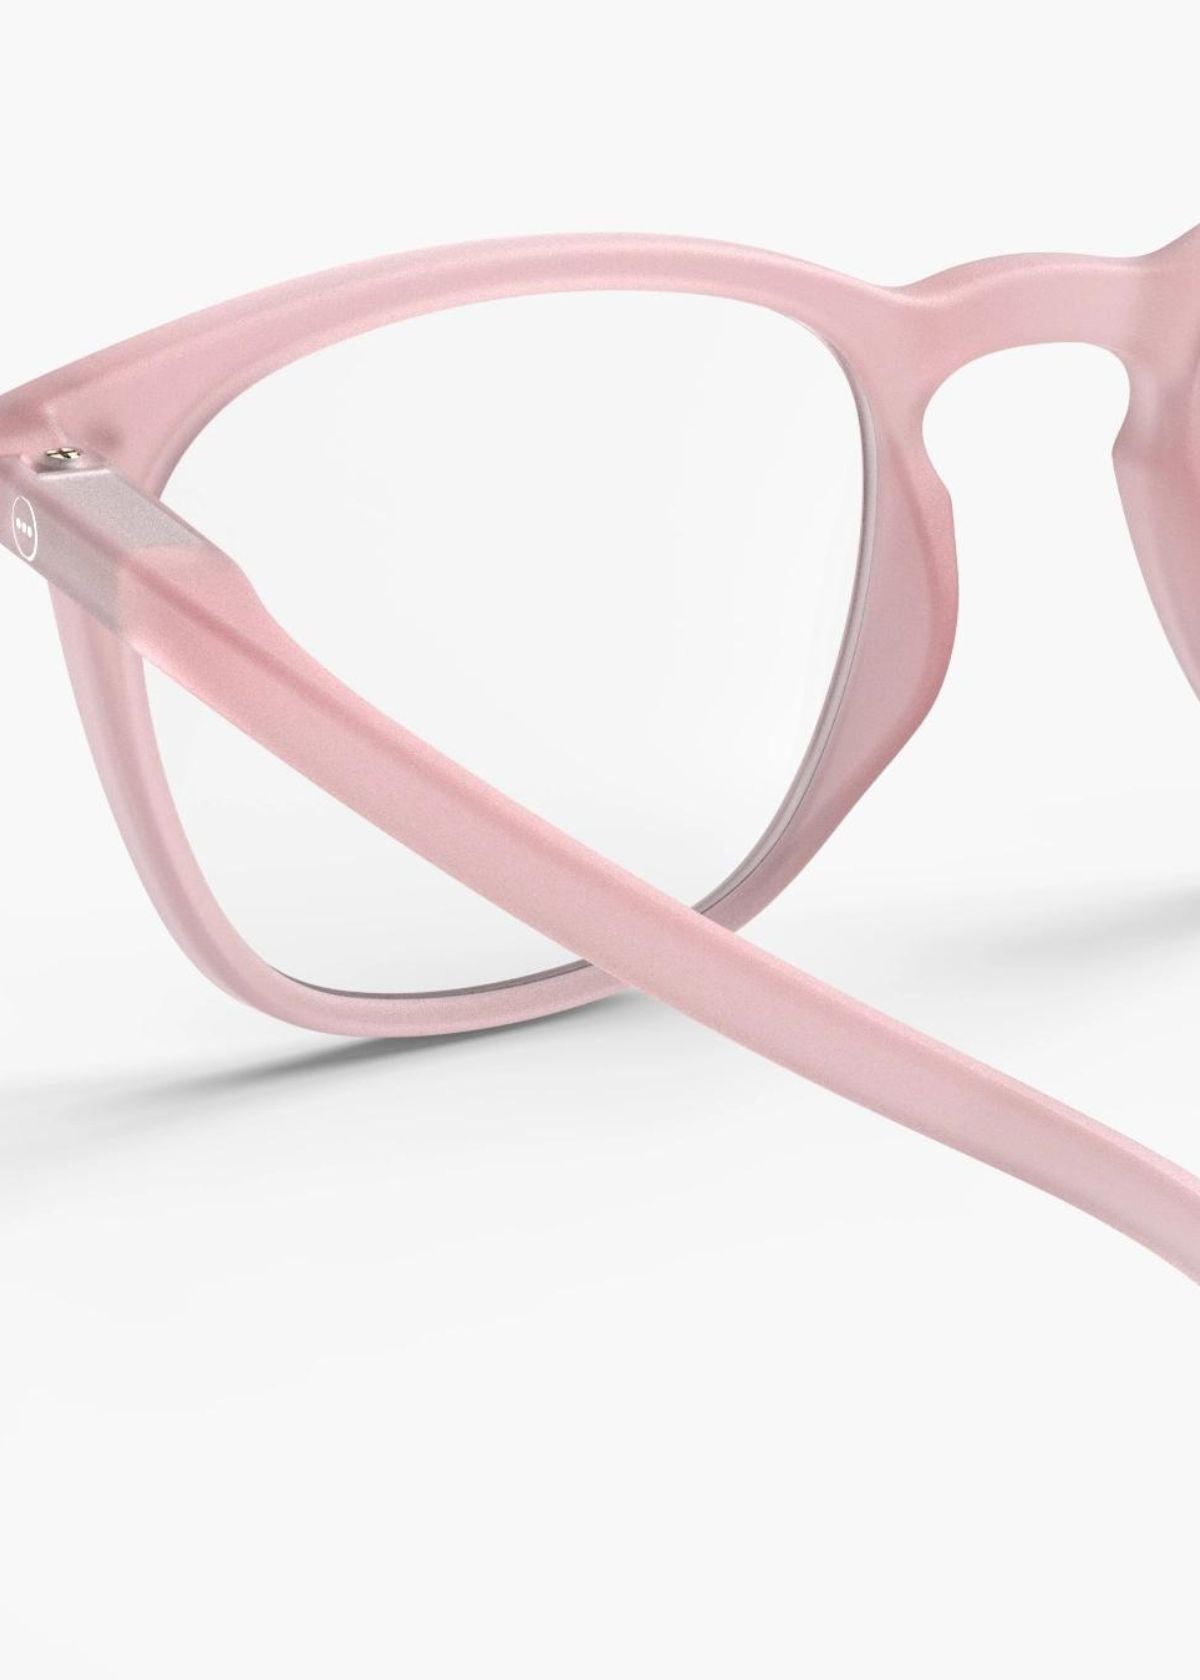 IZIPIZI Trapezium Shaped Reading Glasses #E in Pink